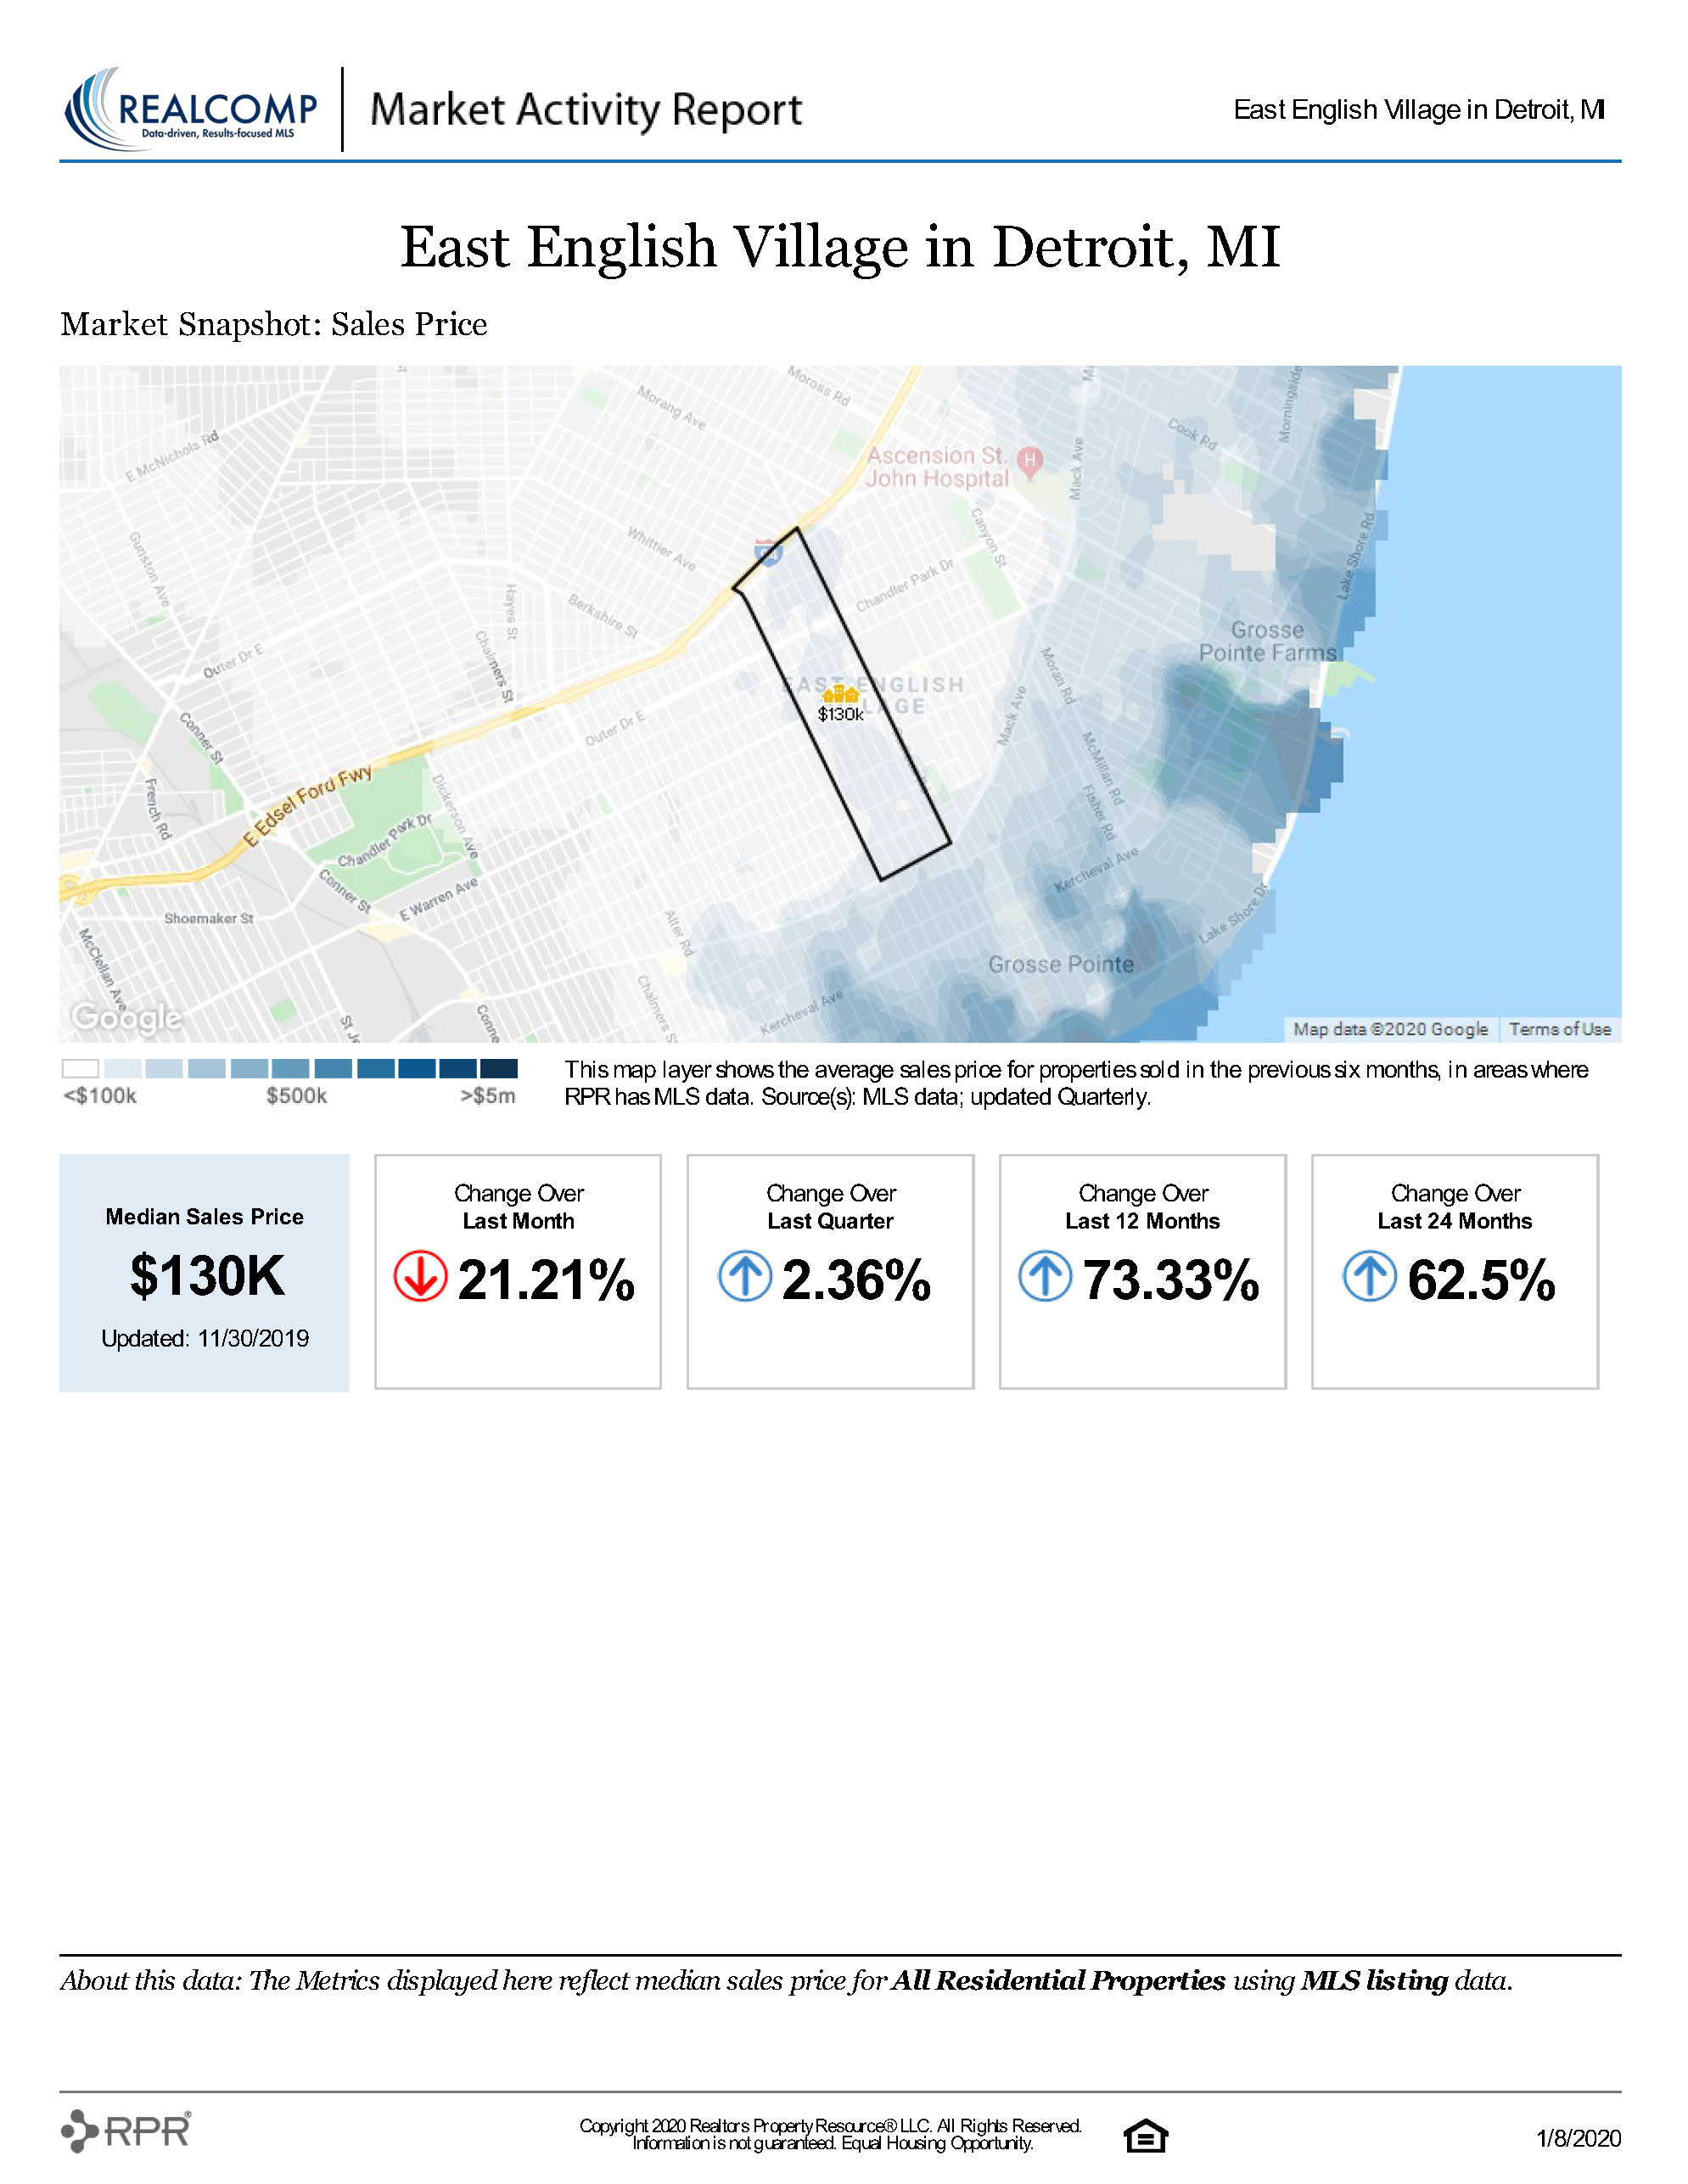 Market-Activity-Report_East-English-Village-in-Detroit-MI_2020-01-08-18-38-24_Page_05.jpg